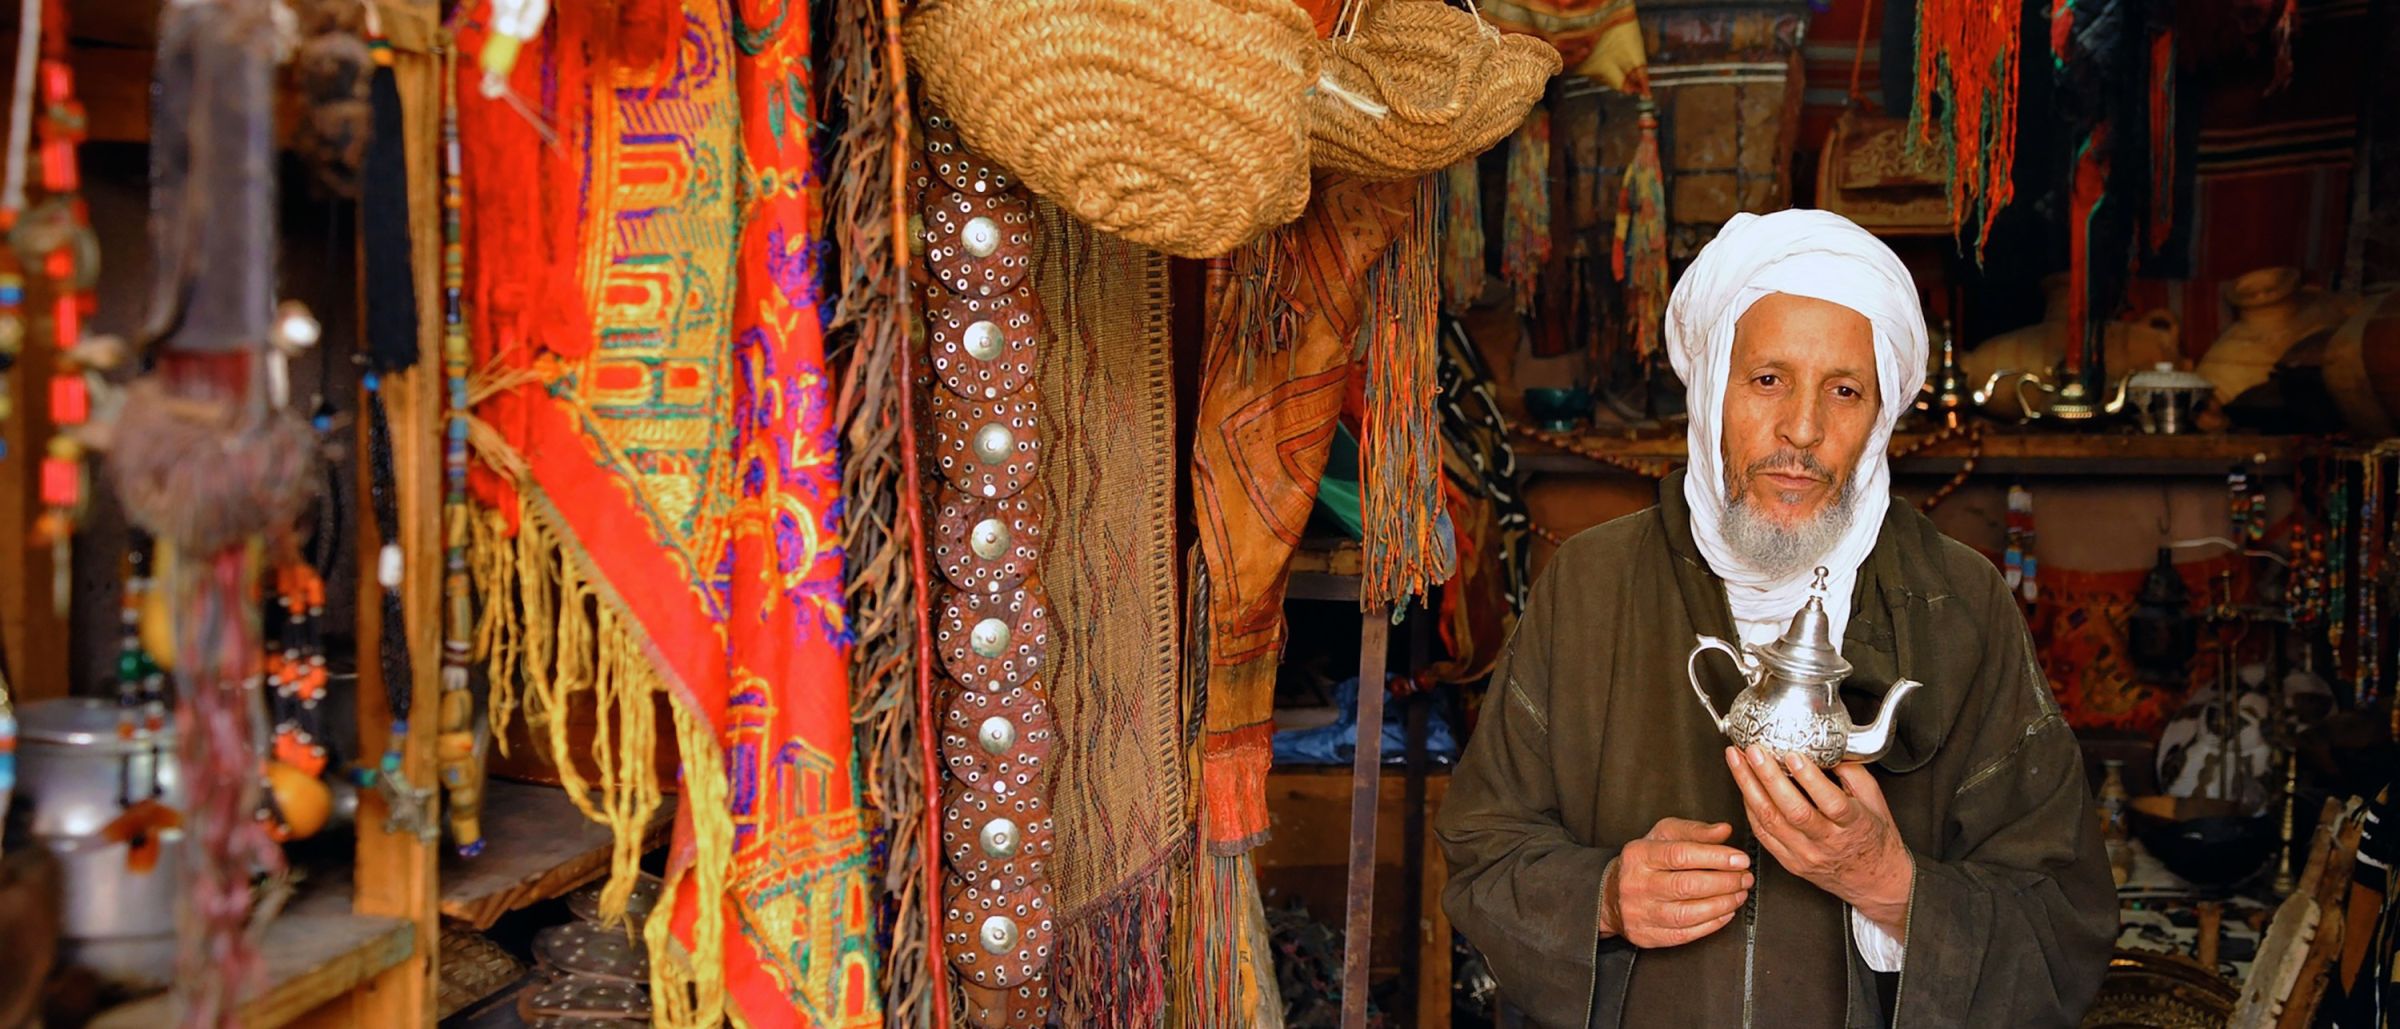 Aladins Wunderkanne im Souk in Marrakesch, Marokko